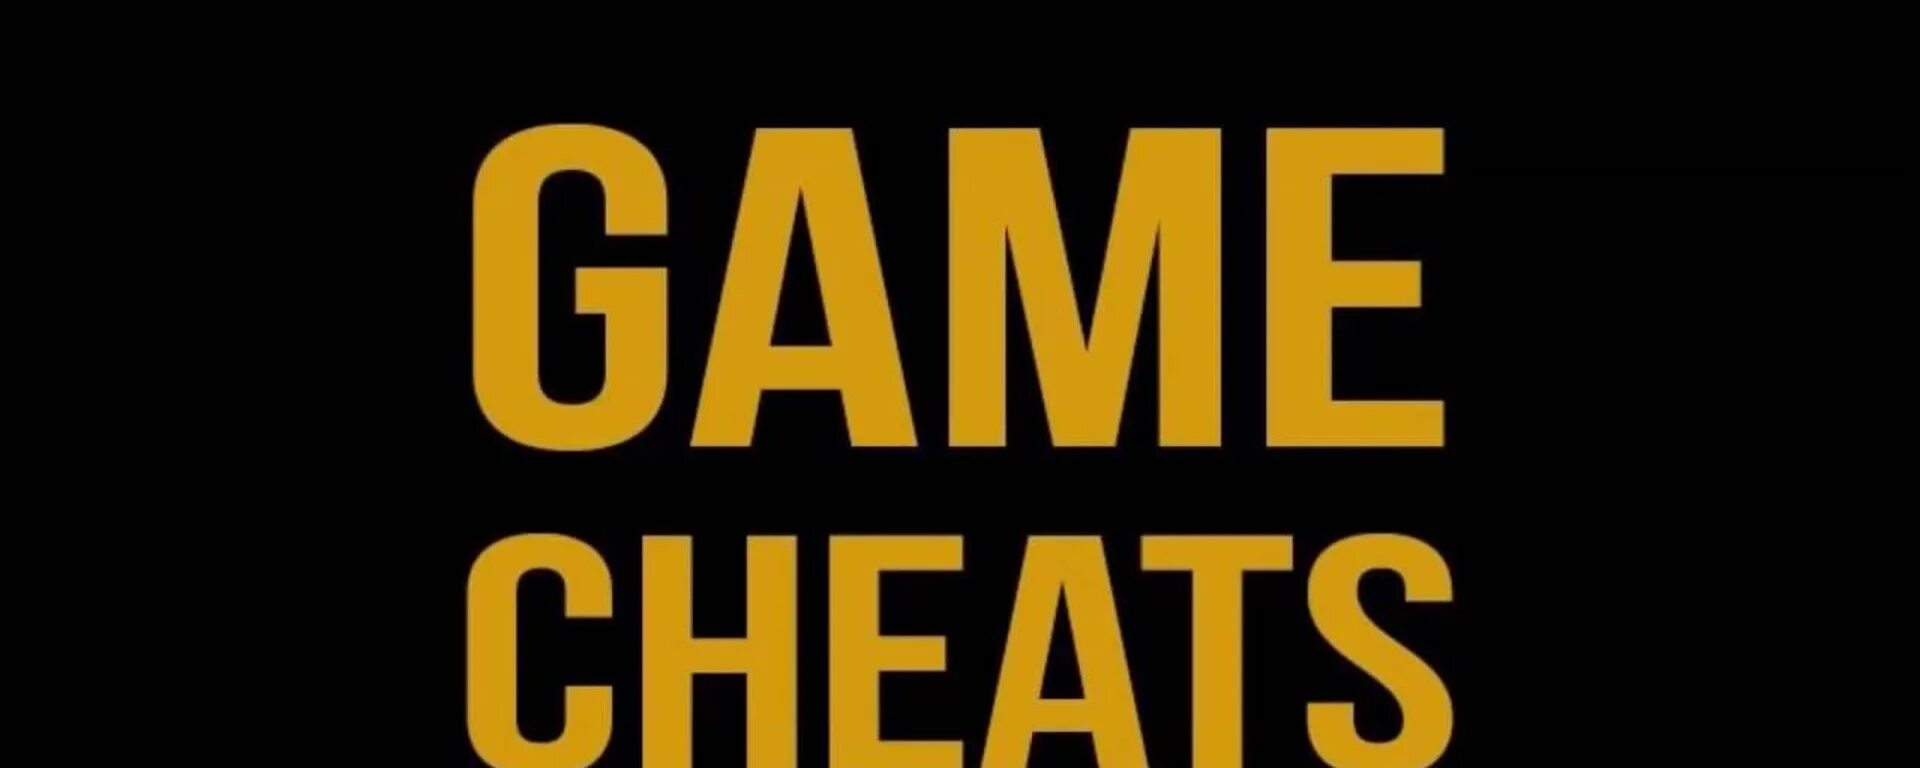 Game Cheats. Cheat аватарка. Cheat лого. Аватарка для читов. Easy gaming cheat